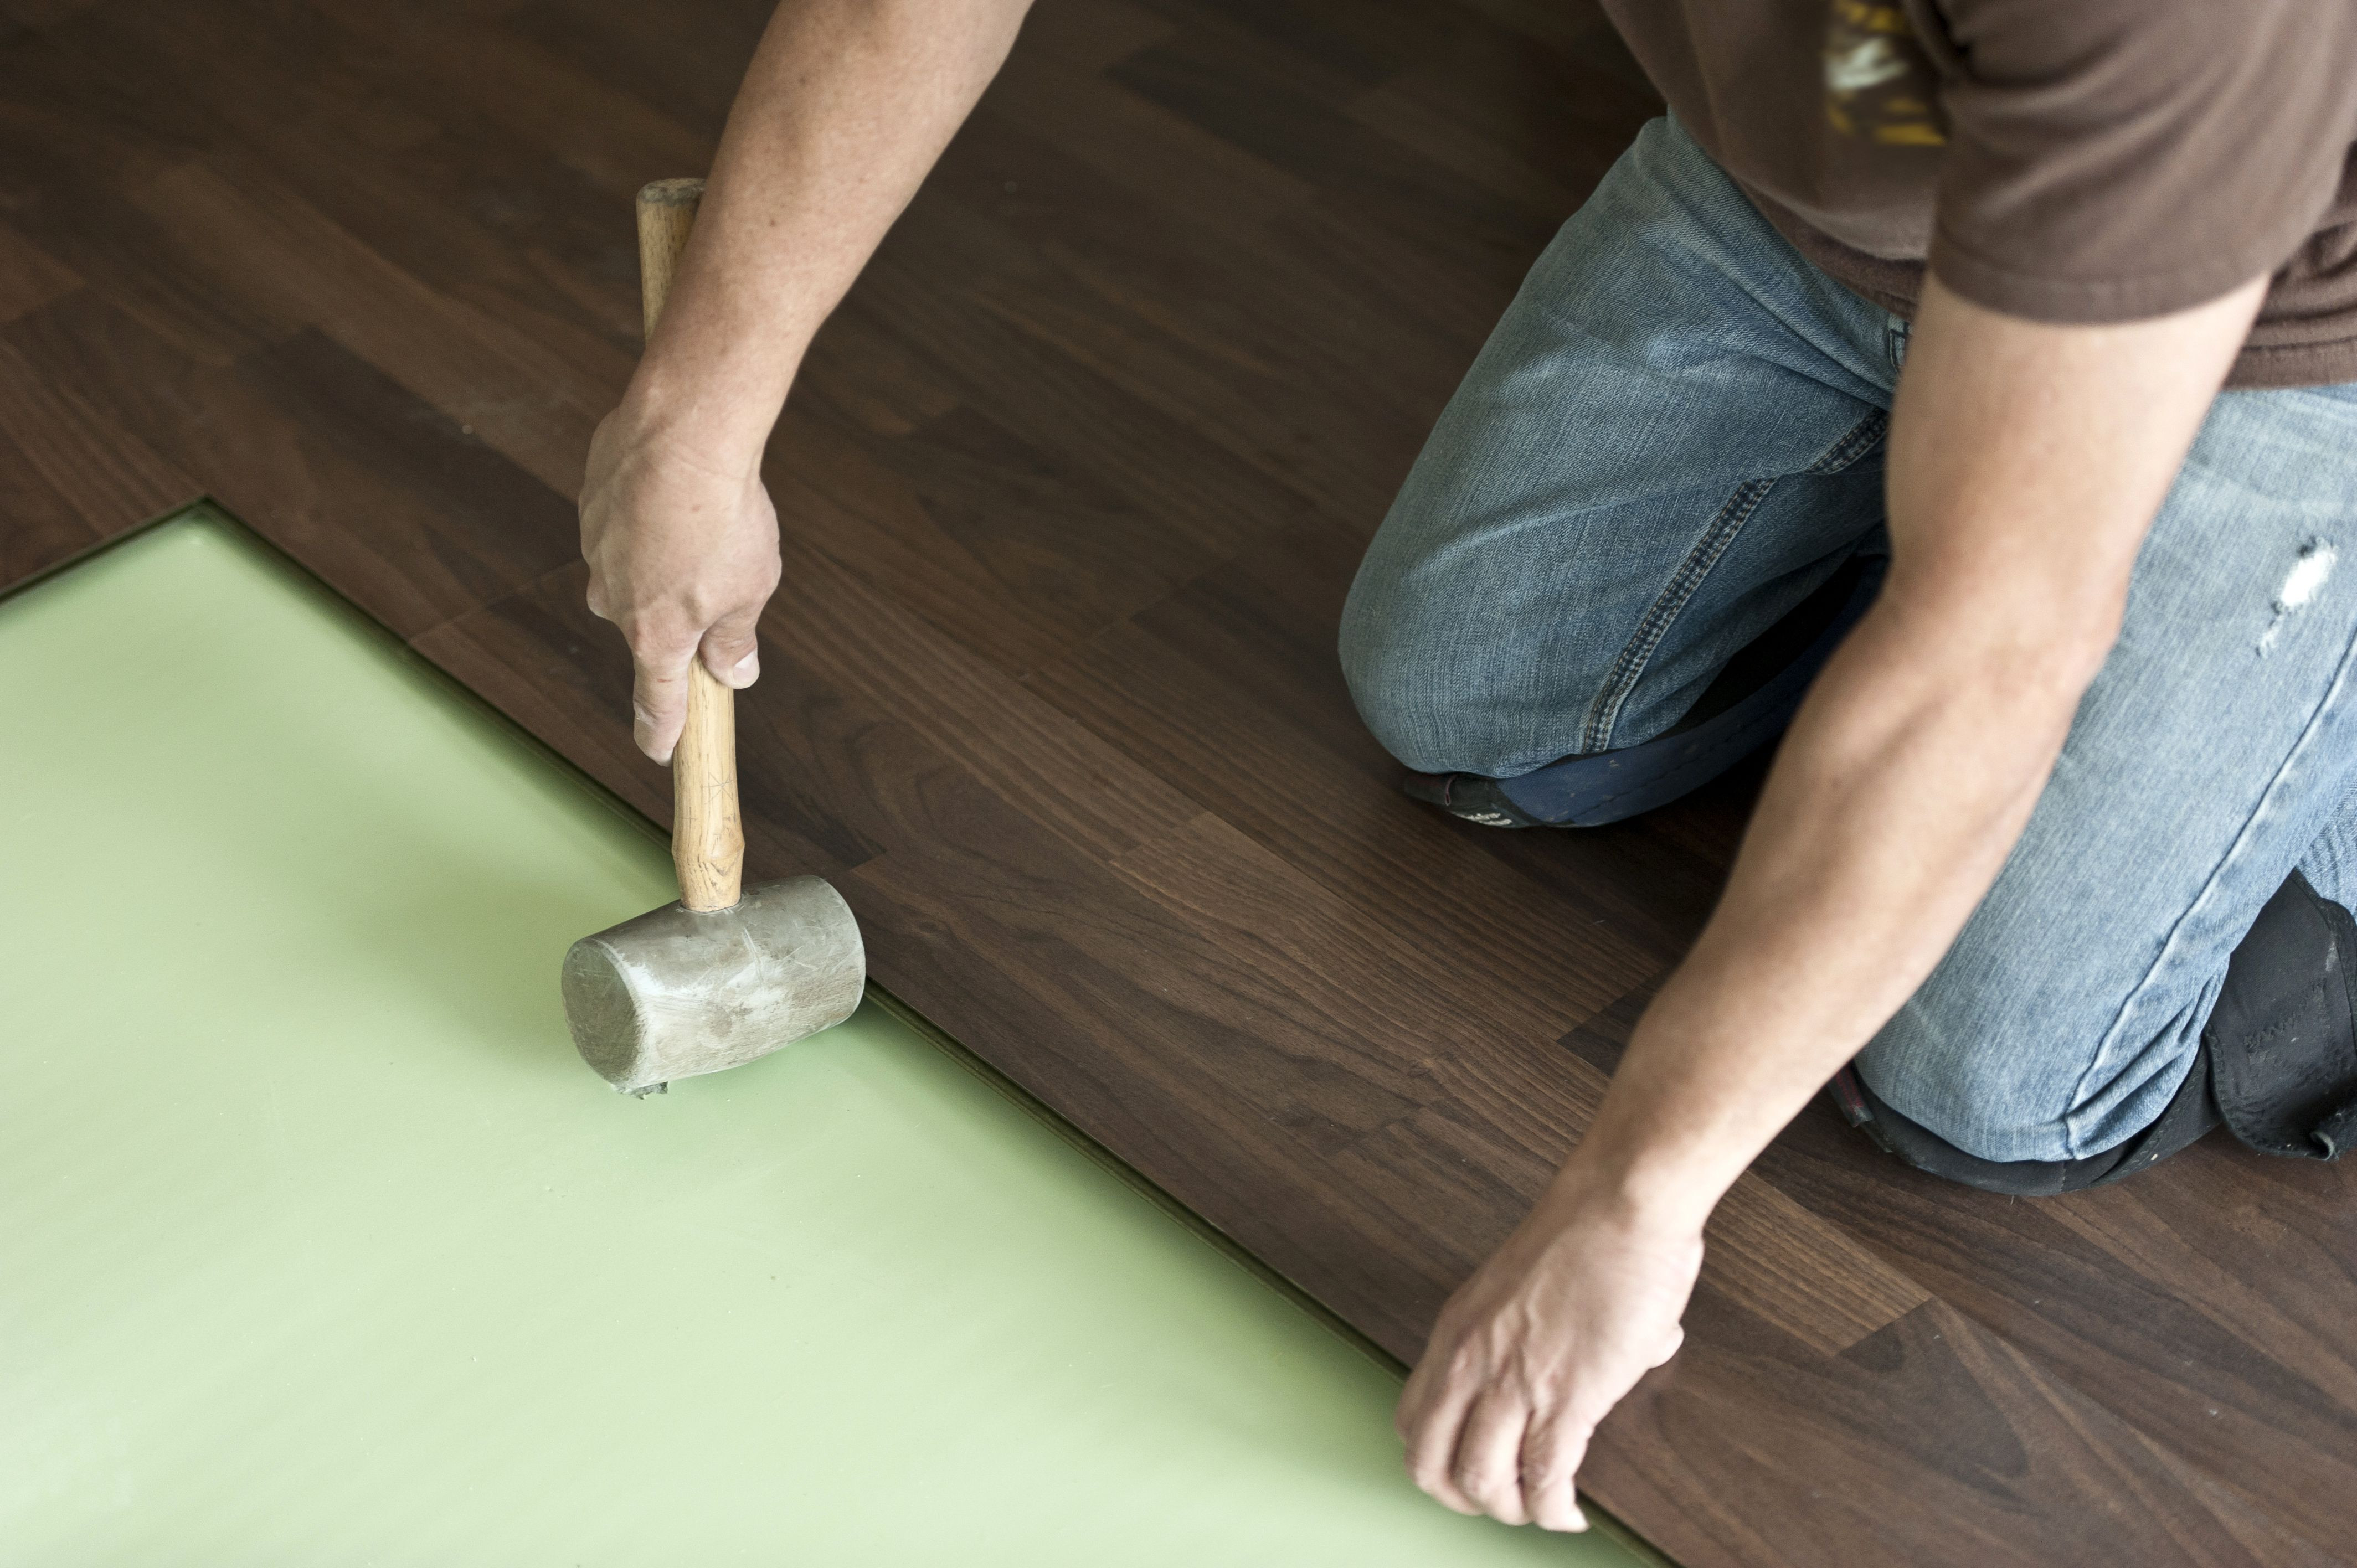 7 Inch Engineered Hardwood Flooring Of Can A Foam Pad Be Use Under solid Hardwood Flooring with Regard to Installing Hardwood Floor 155149312 57e967d45f9b586c35ade84a